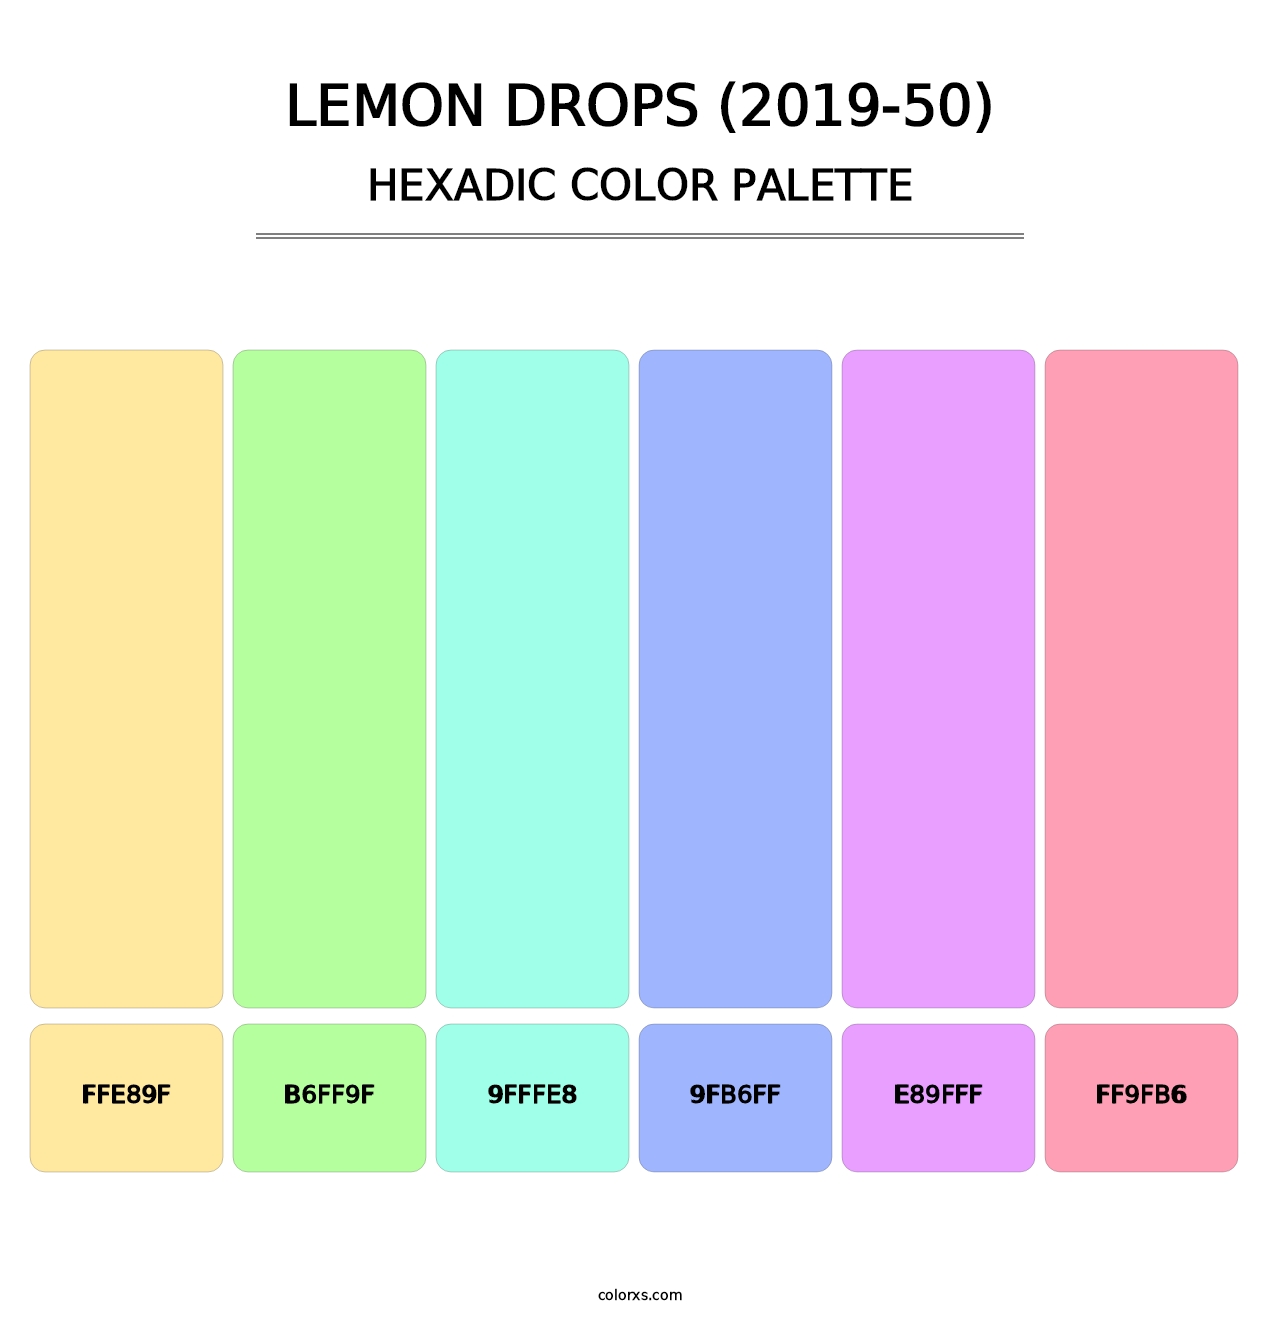 Lemon Drops (2019-50) - Hexadic Color Palette